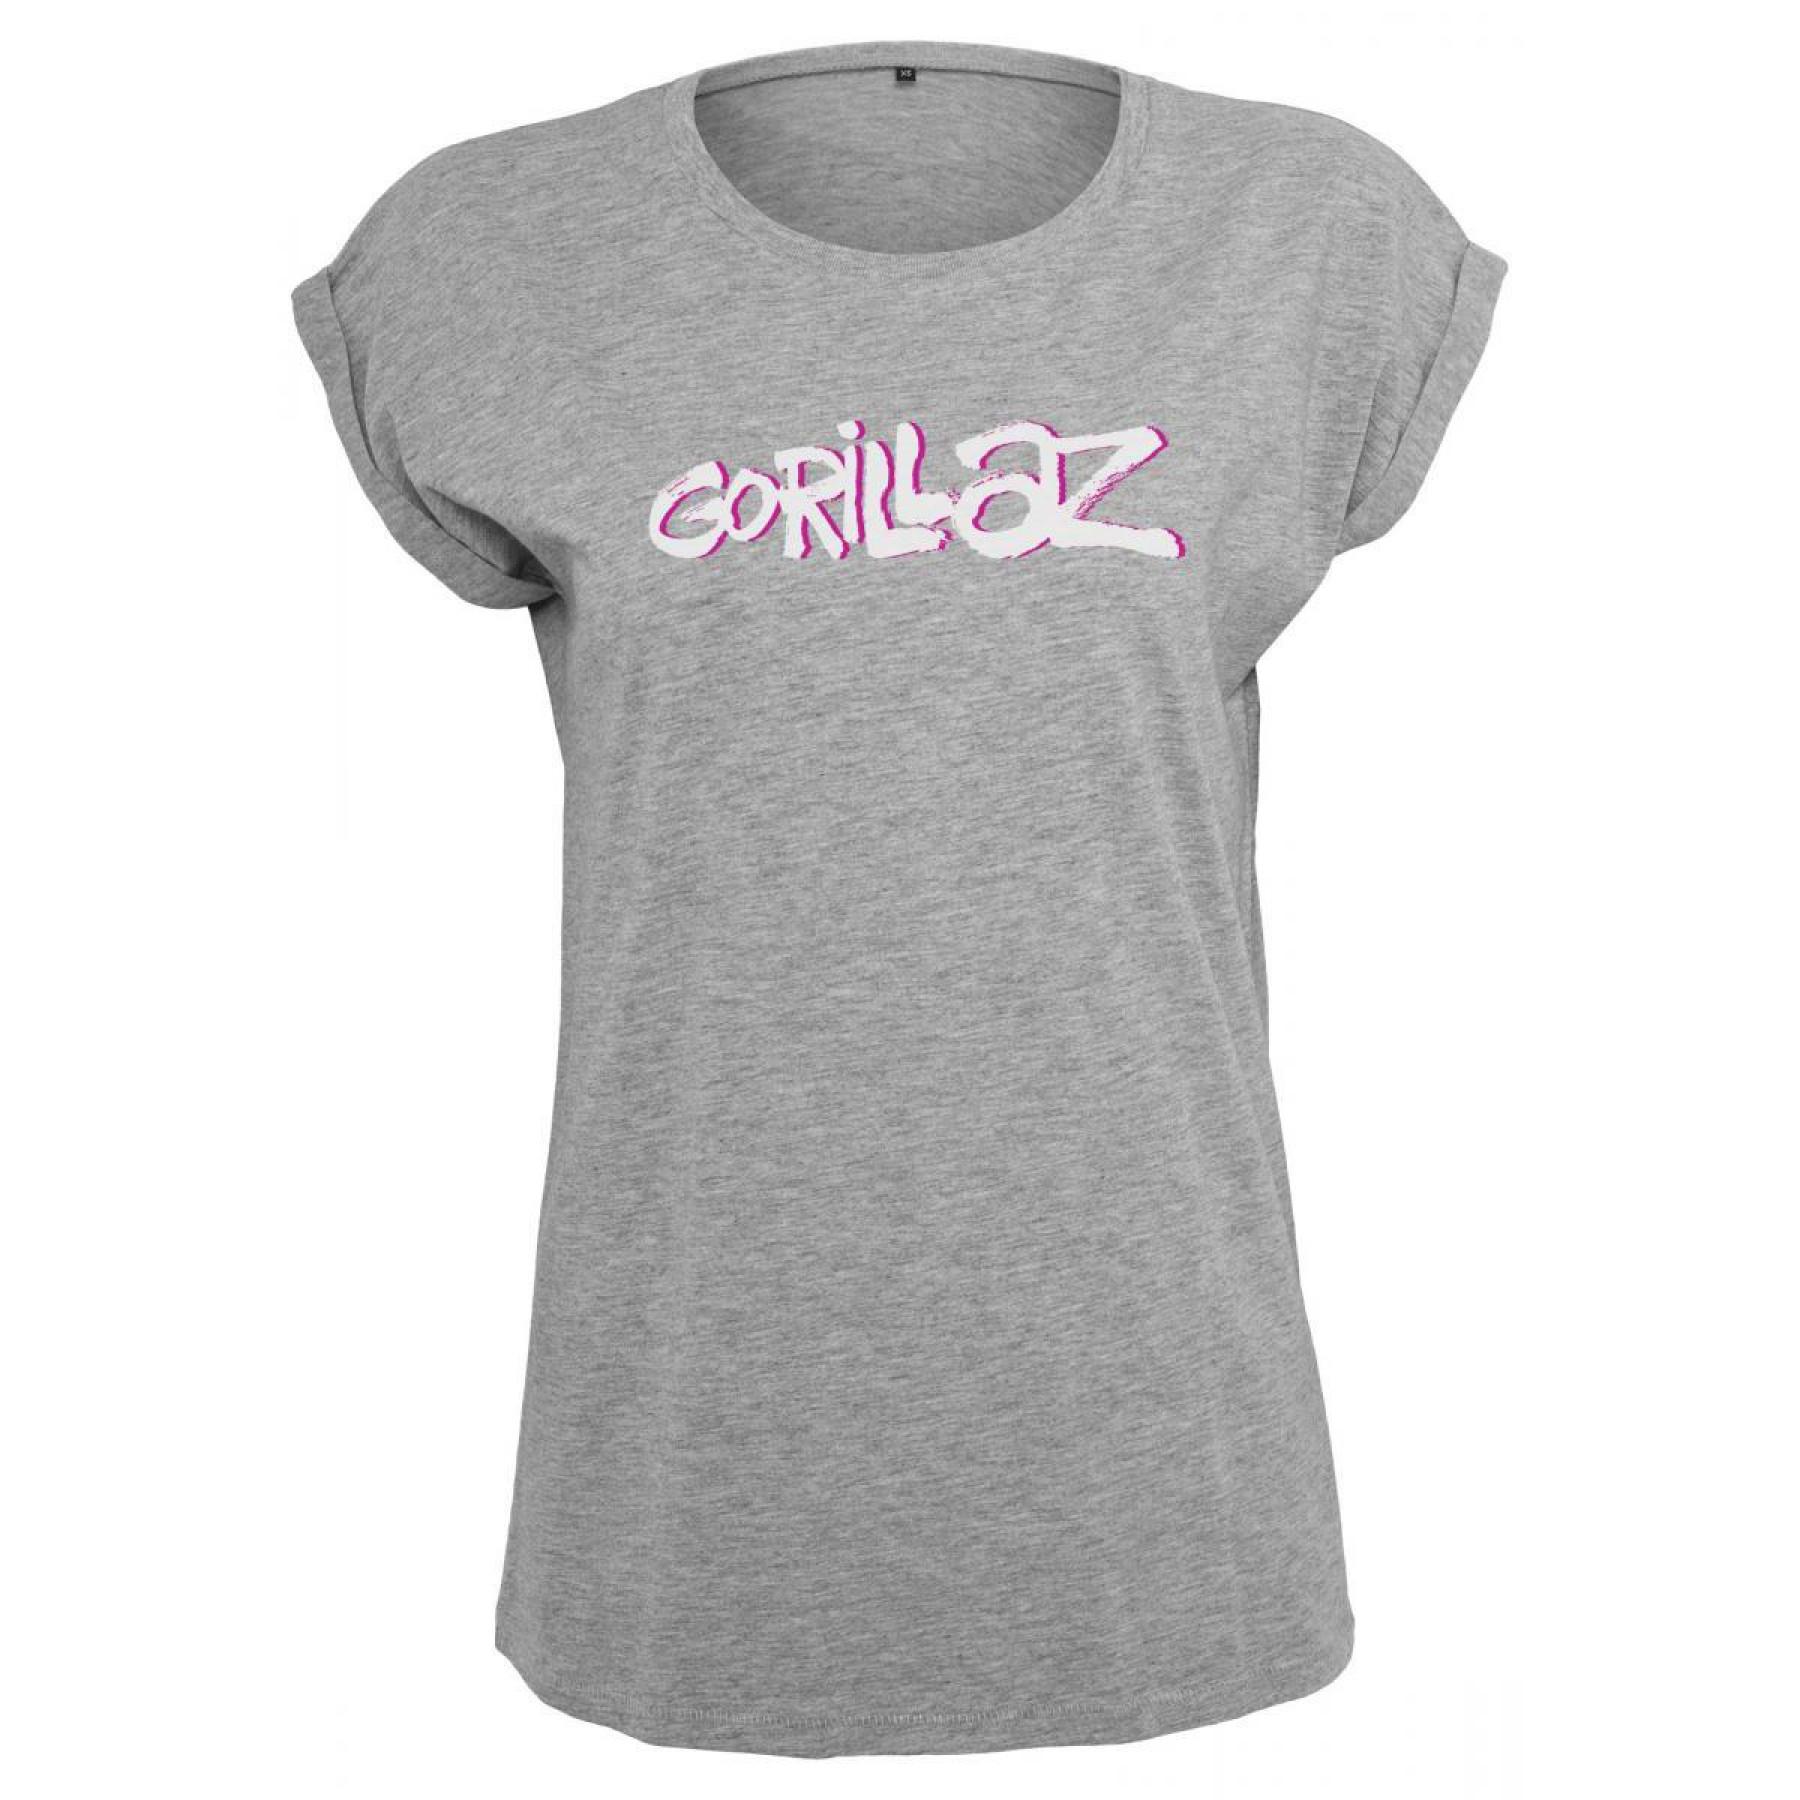 T-shirt woman Urban Classic gorillaz logo